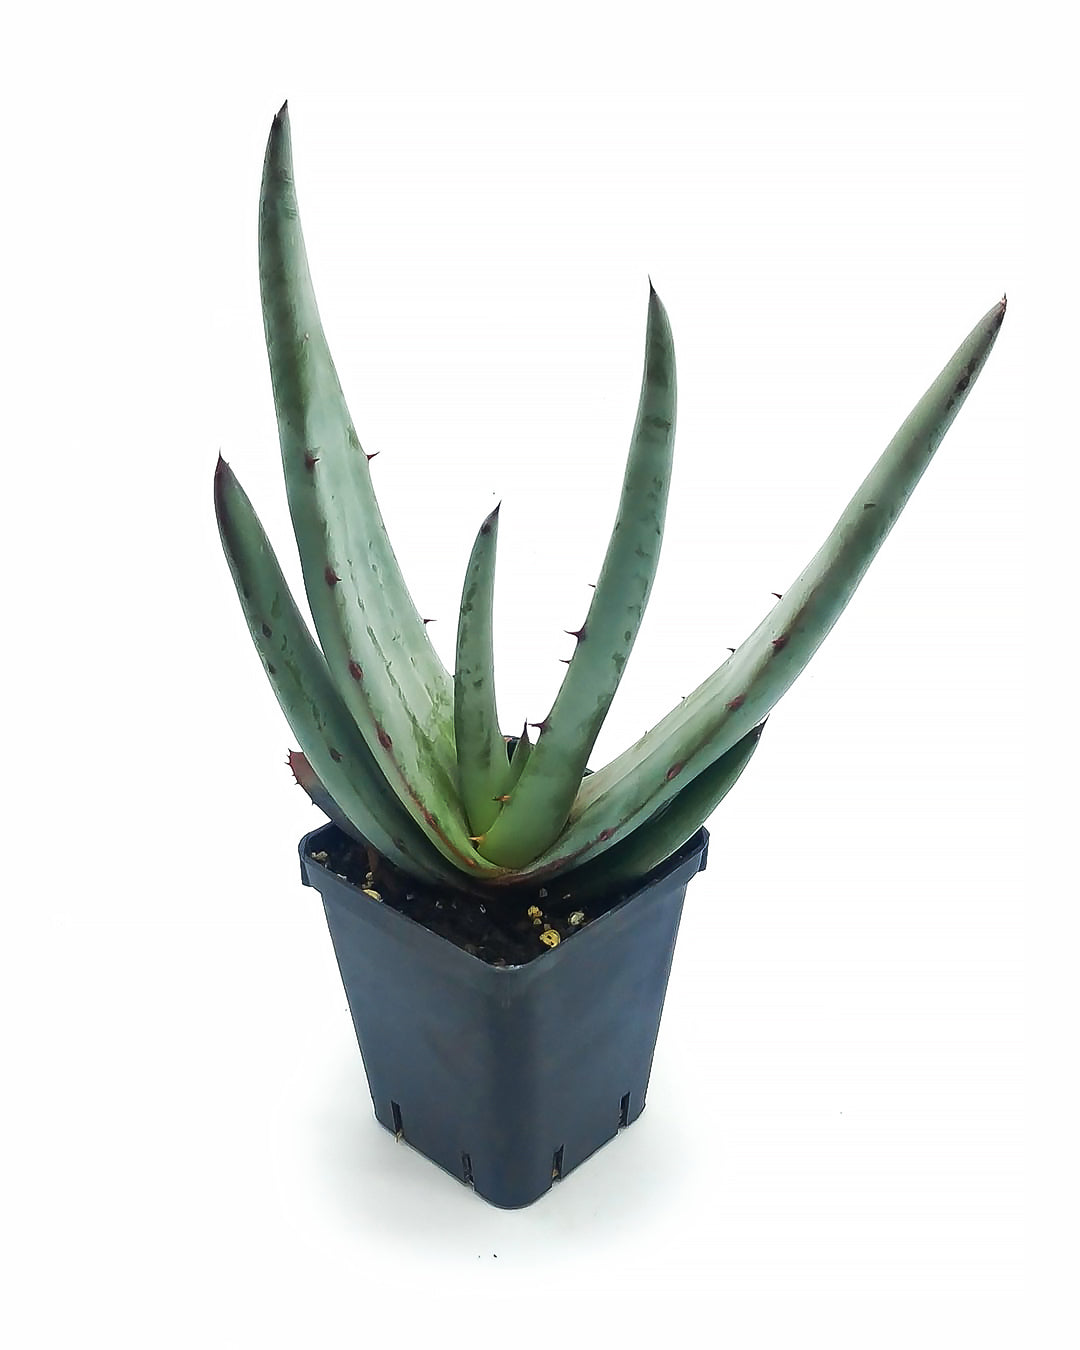 Aloe petricola - stone aloe (Square vase 7x7x8 cm)